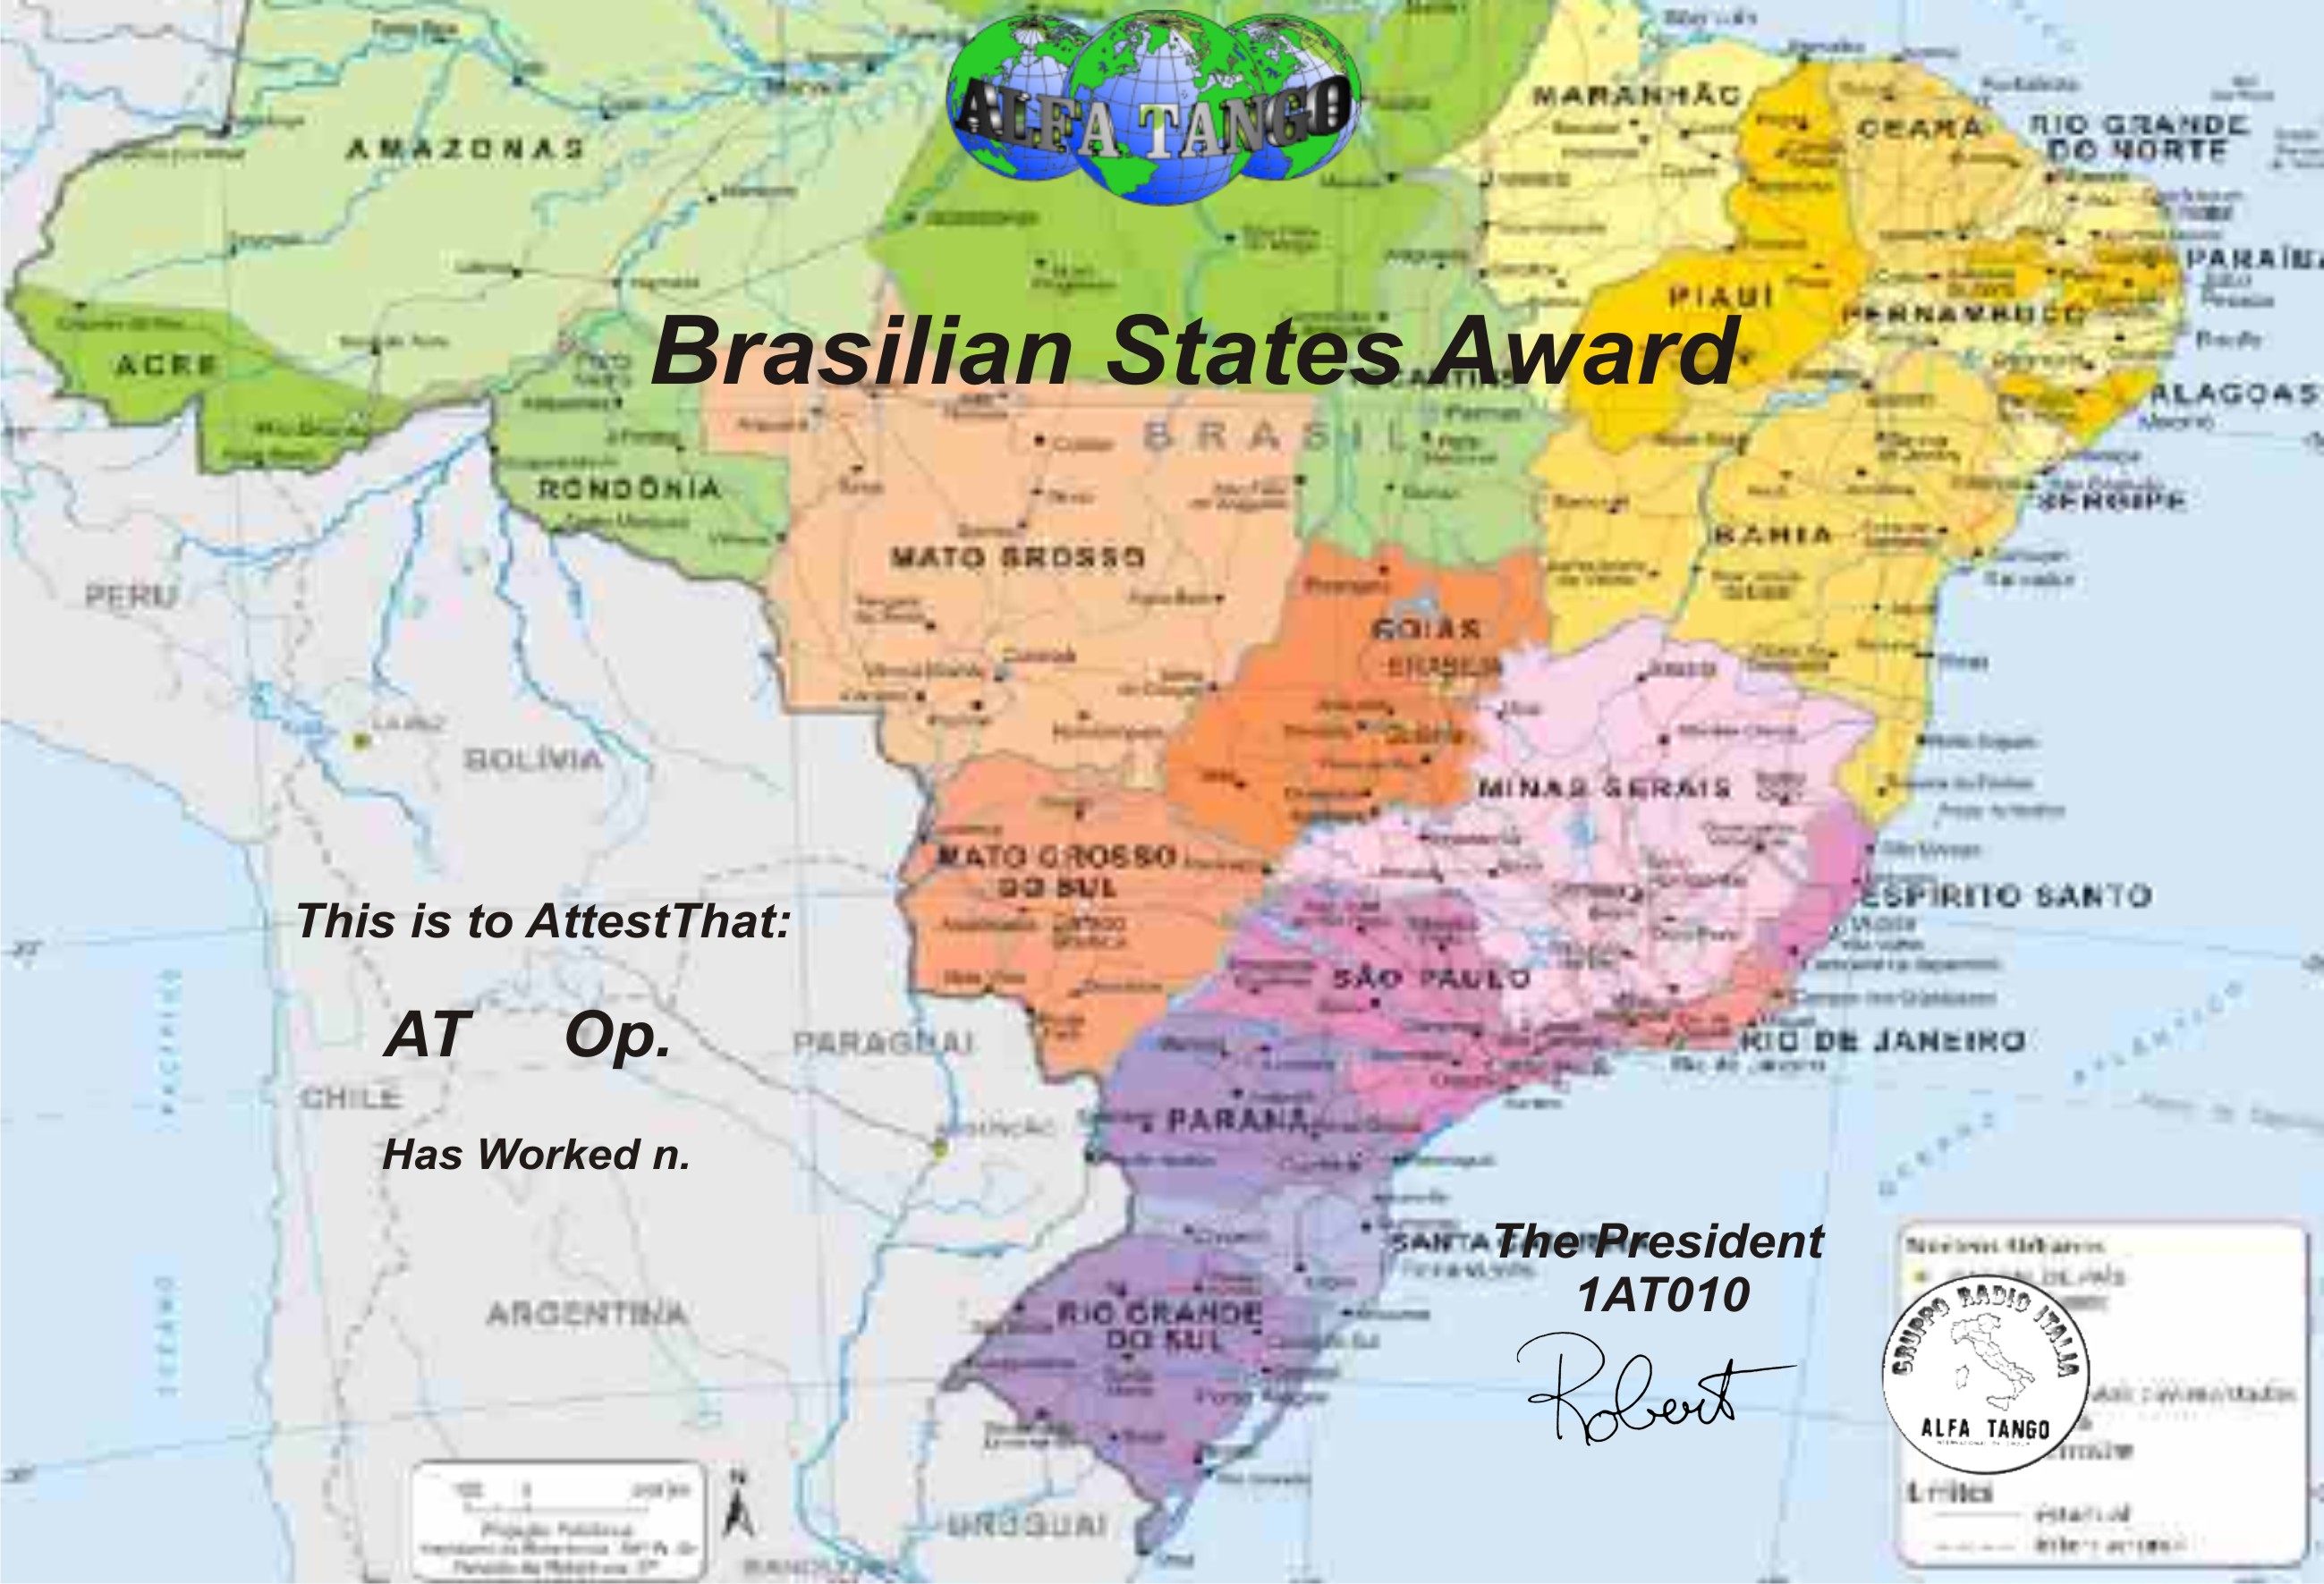 15_Brasilian_States_Award.jpg